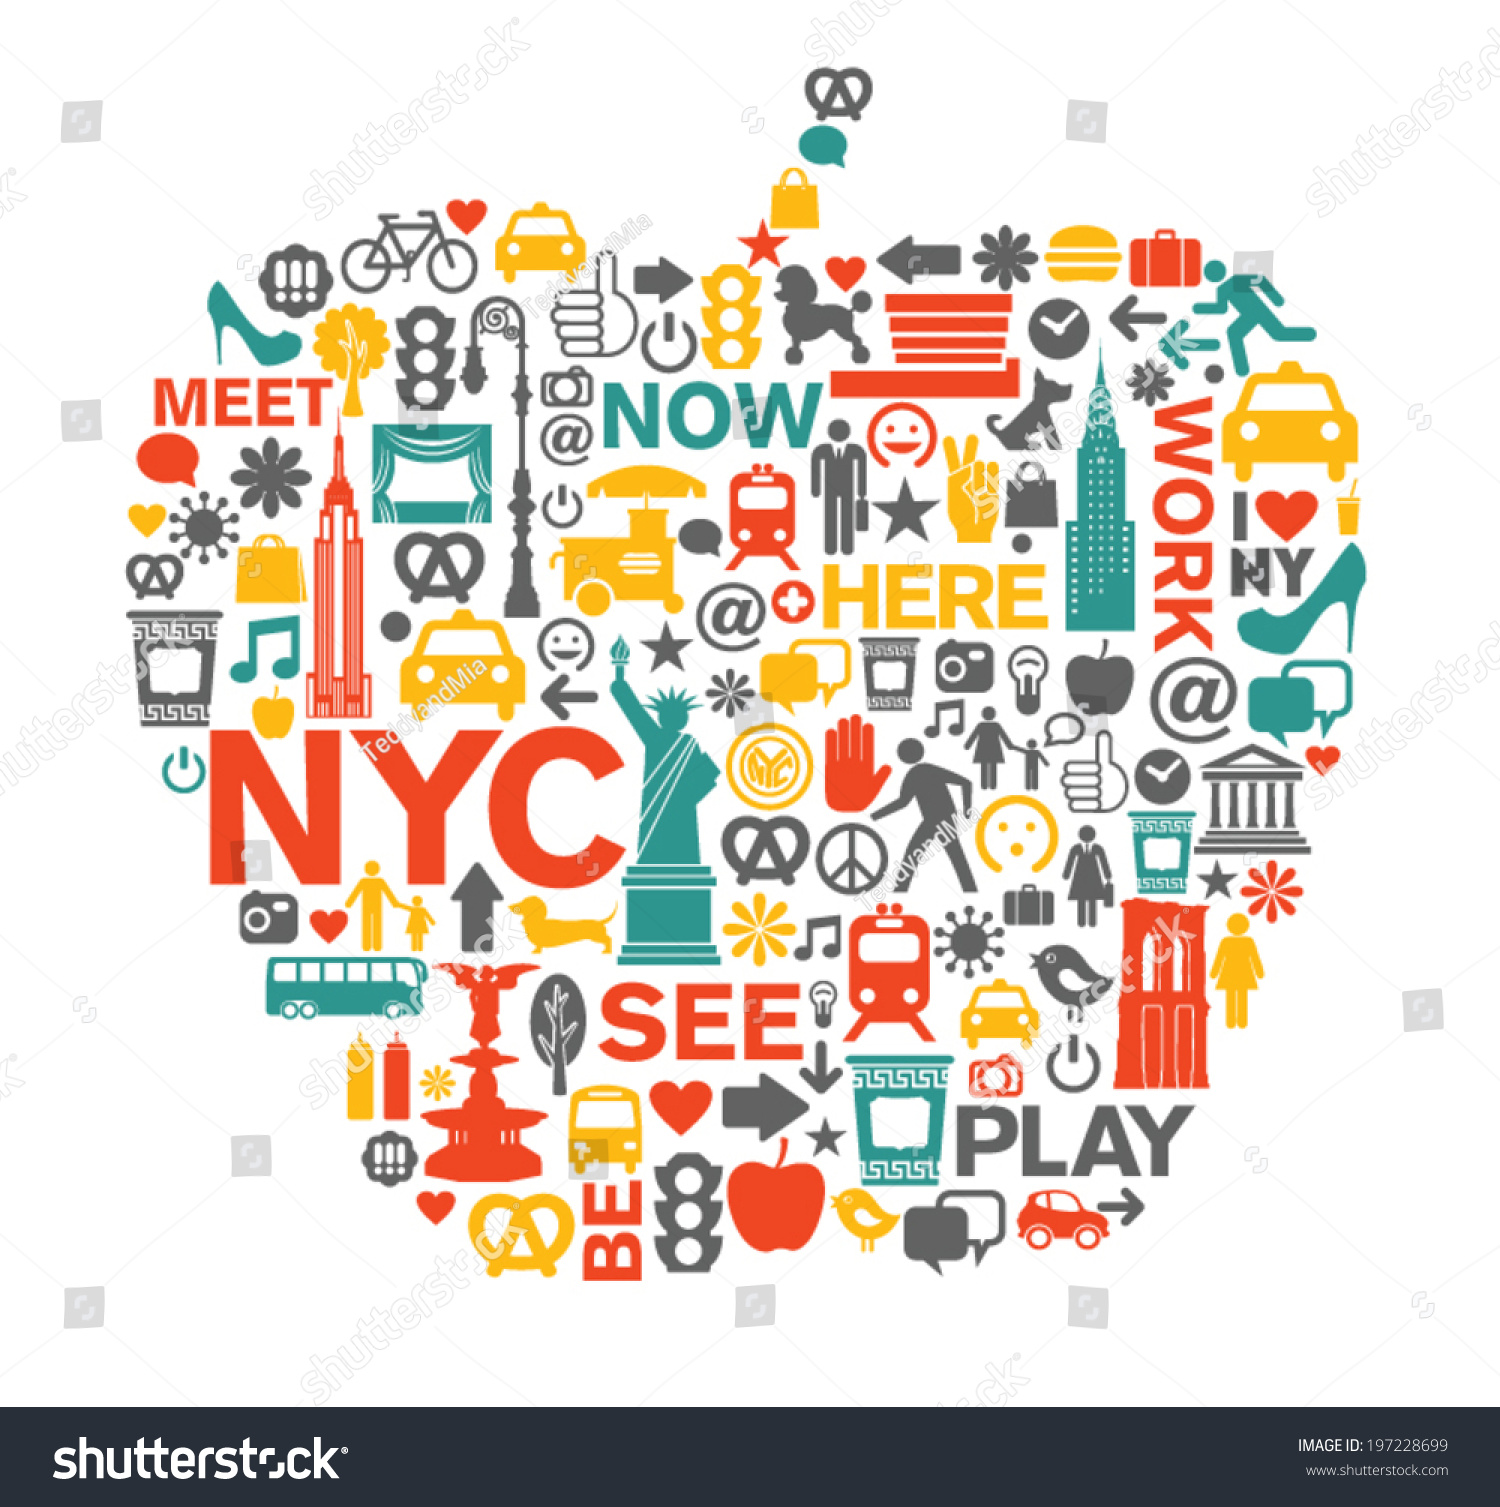 New York City Nyc Icons Symbols Stock Vector 197228699 ...